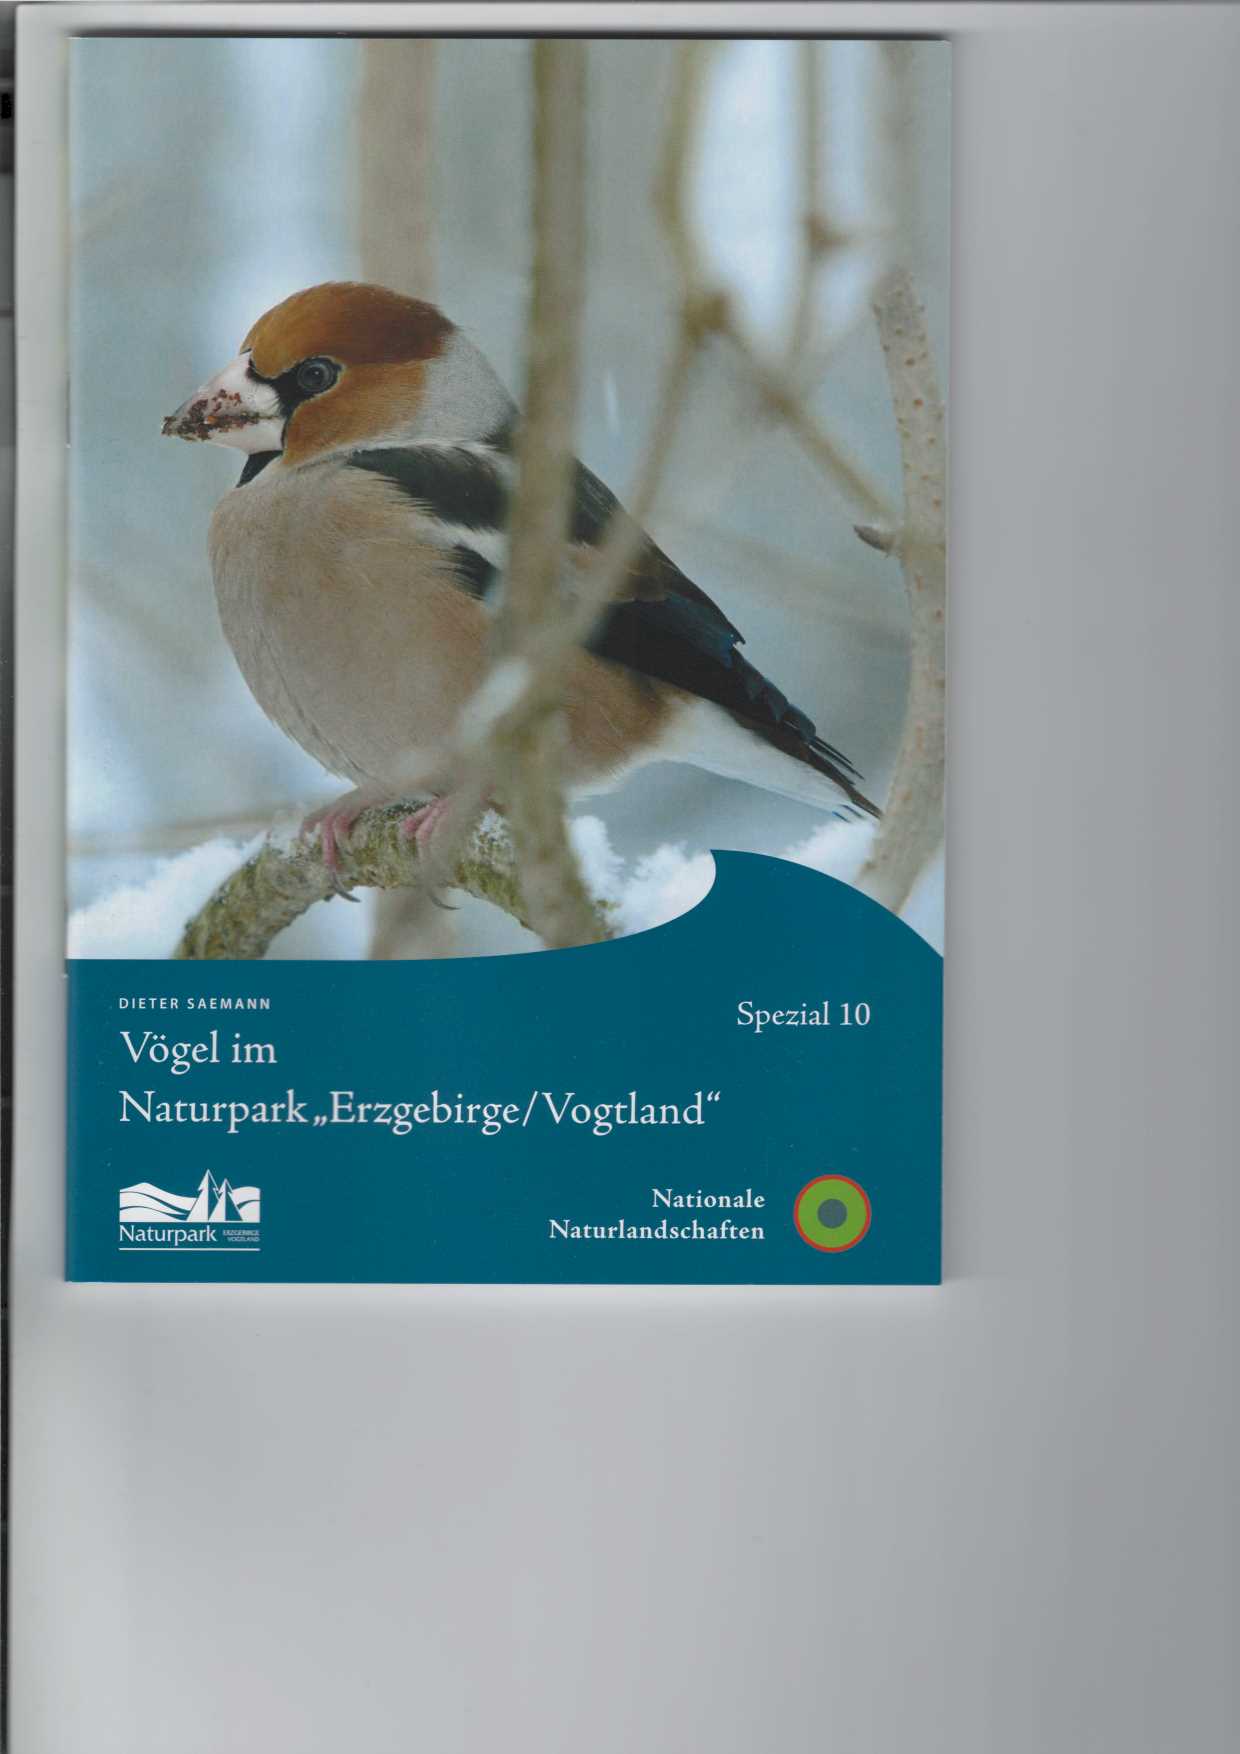 Vögel im Naturpark "Erzgebirge / Vogtland".